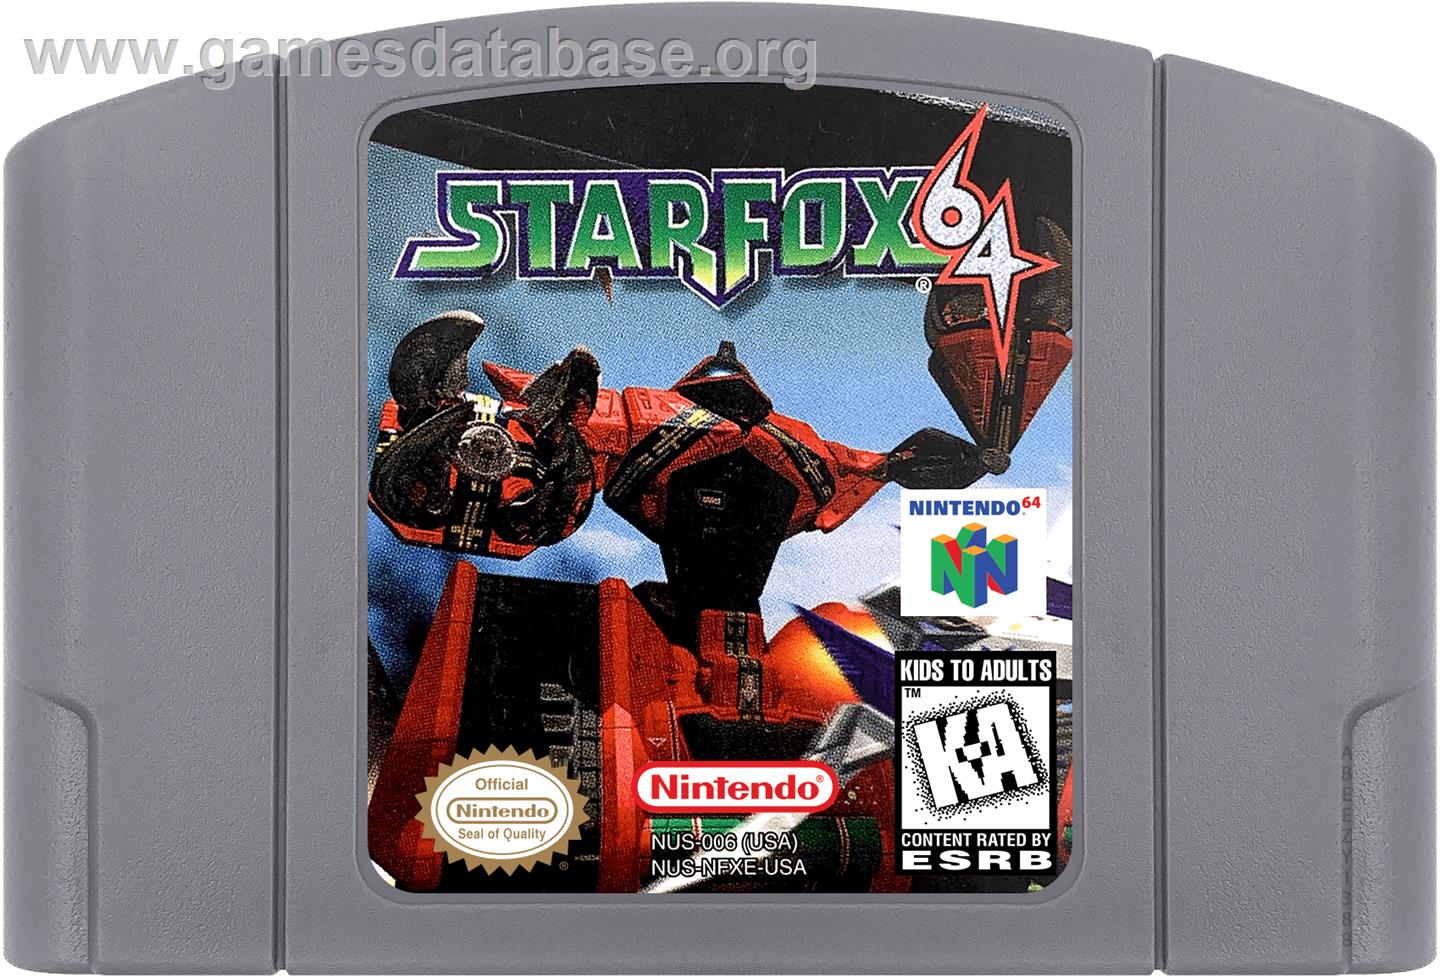 Star Fox 64 - Nintendo N64 - Artwork - Cartridge